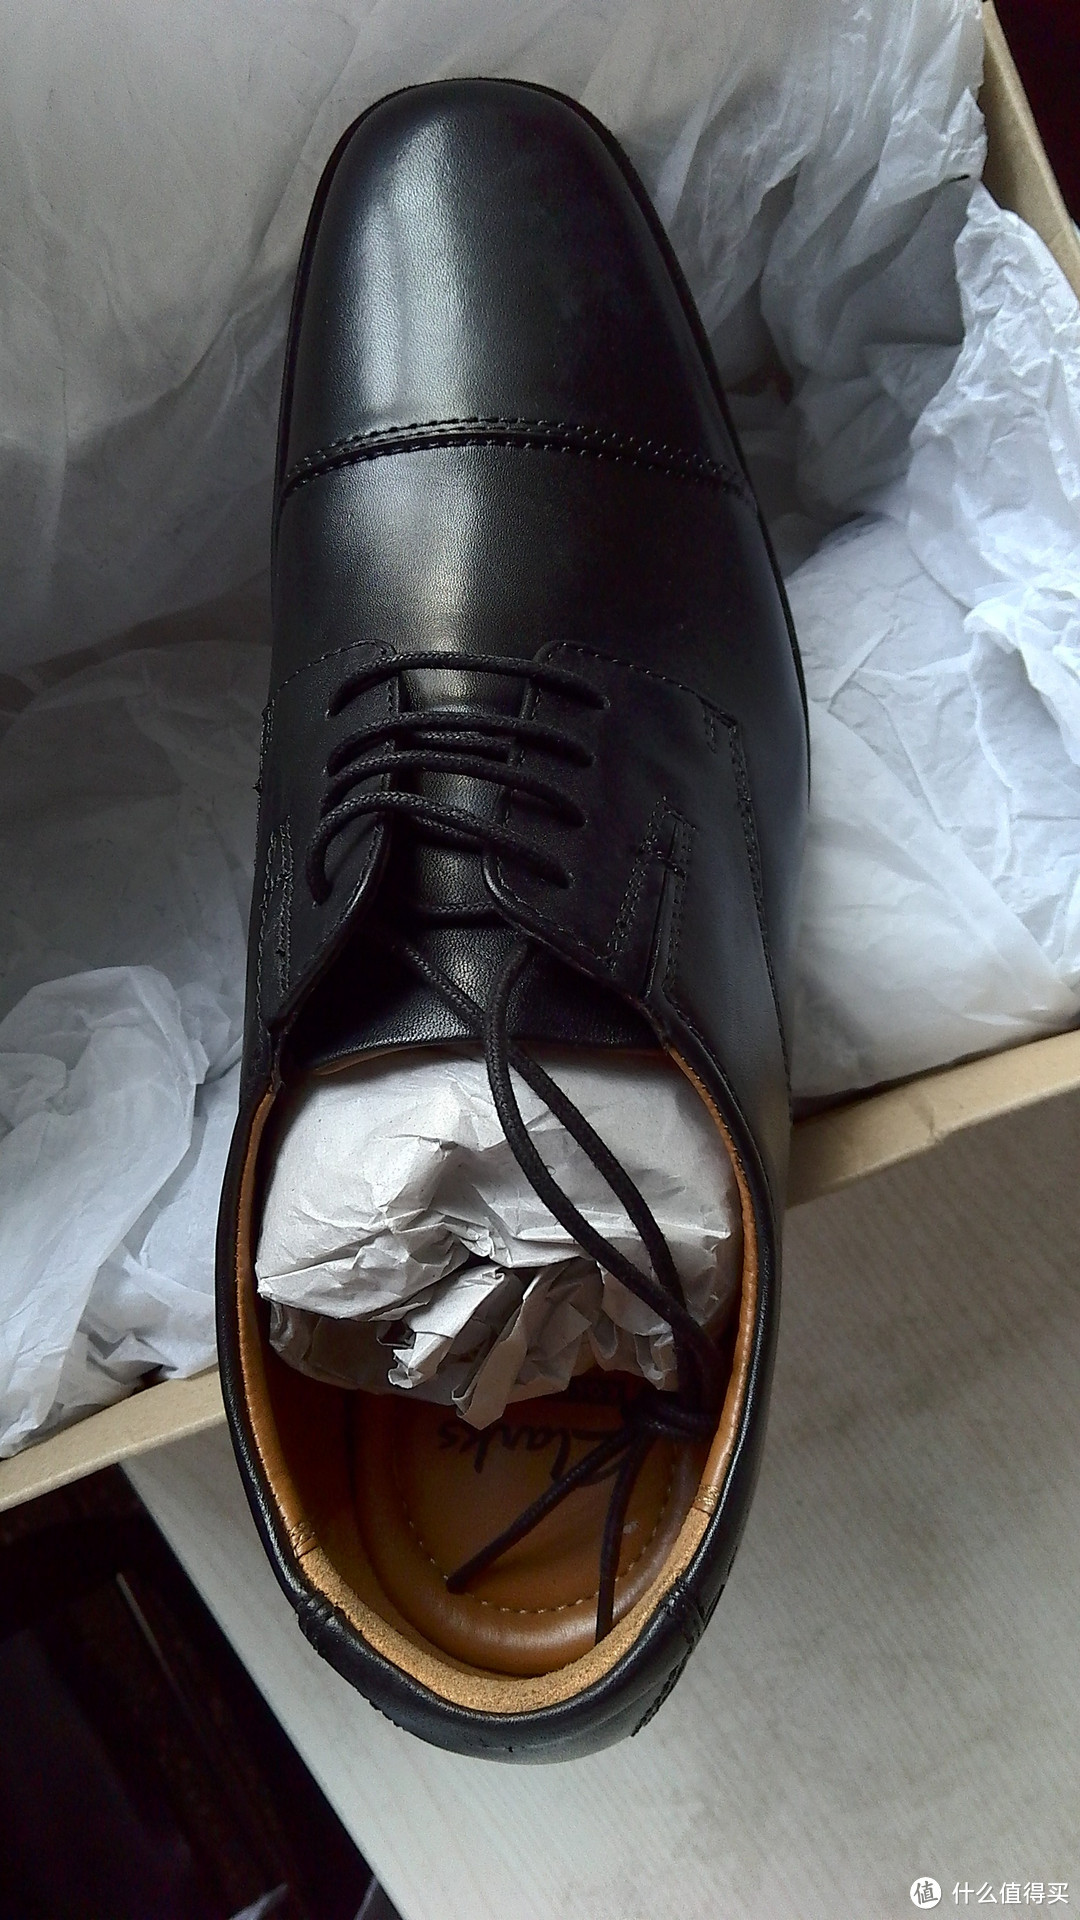 Clarks Men's Tilden Cap Oxford, Black Leather, 9 M US